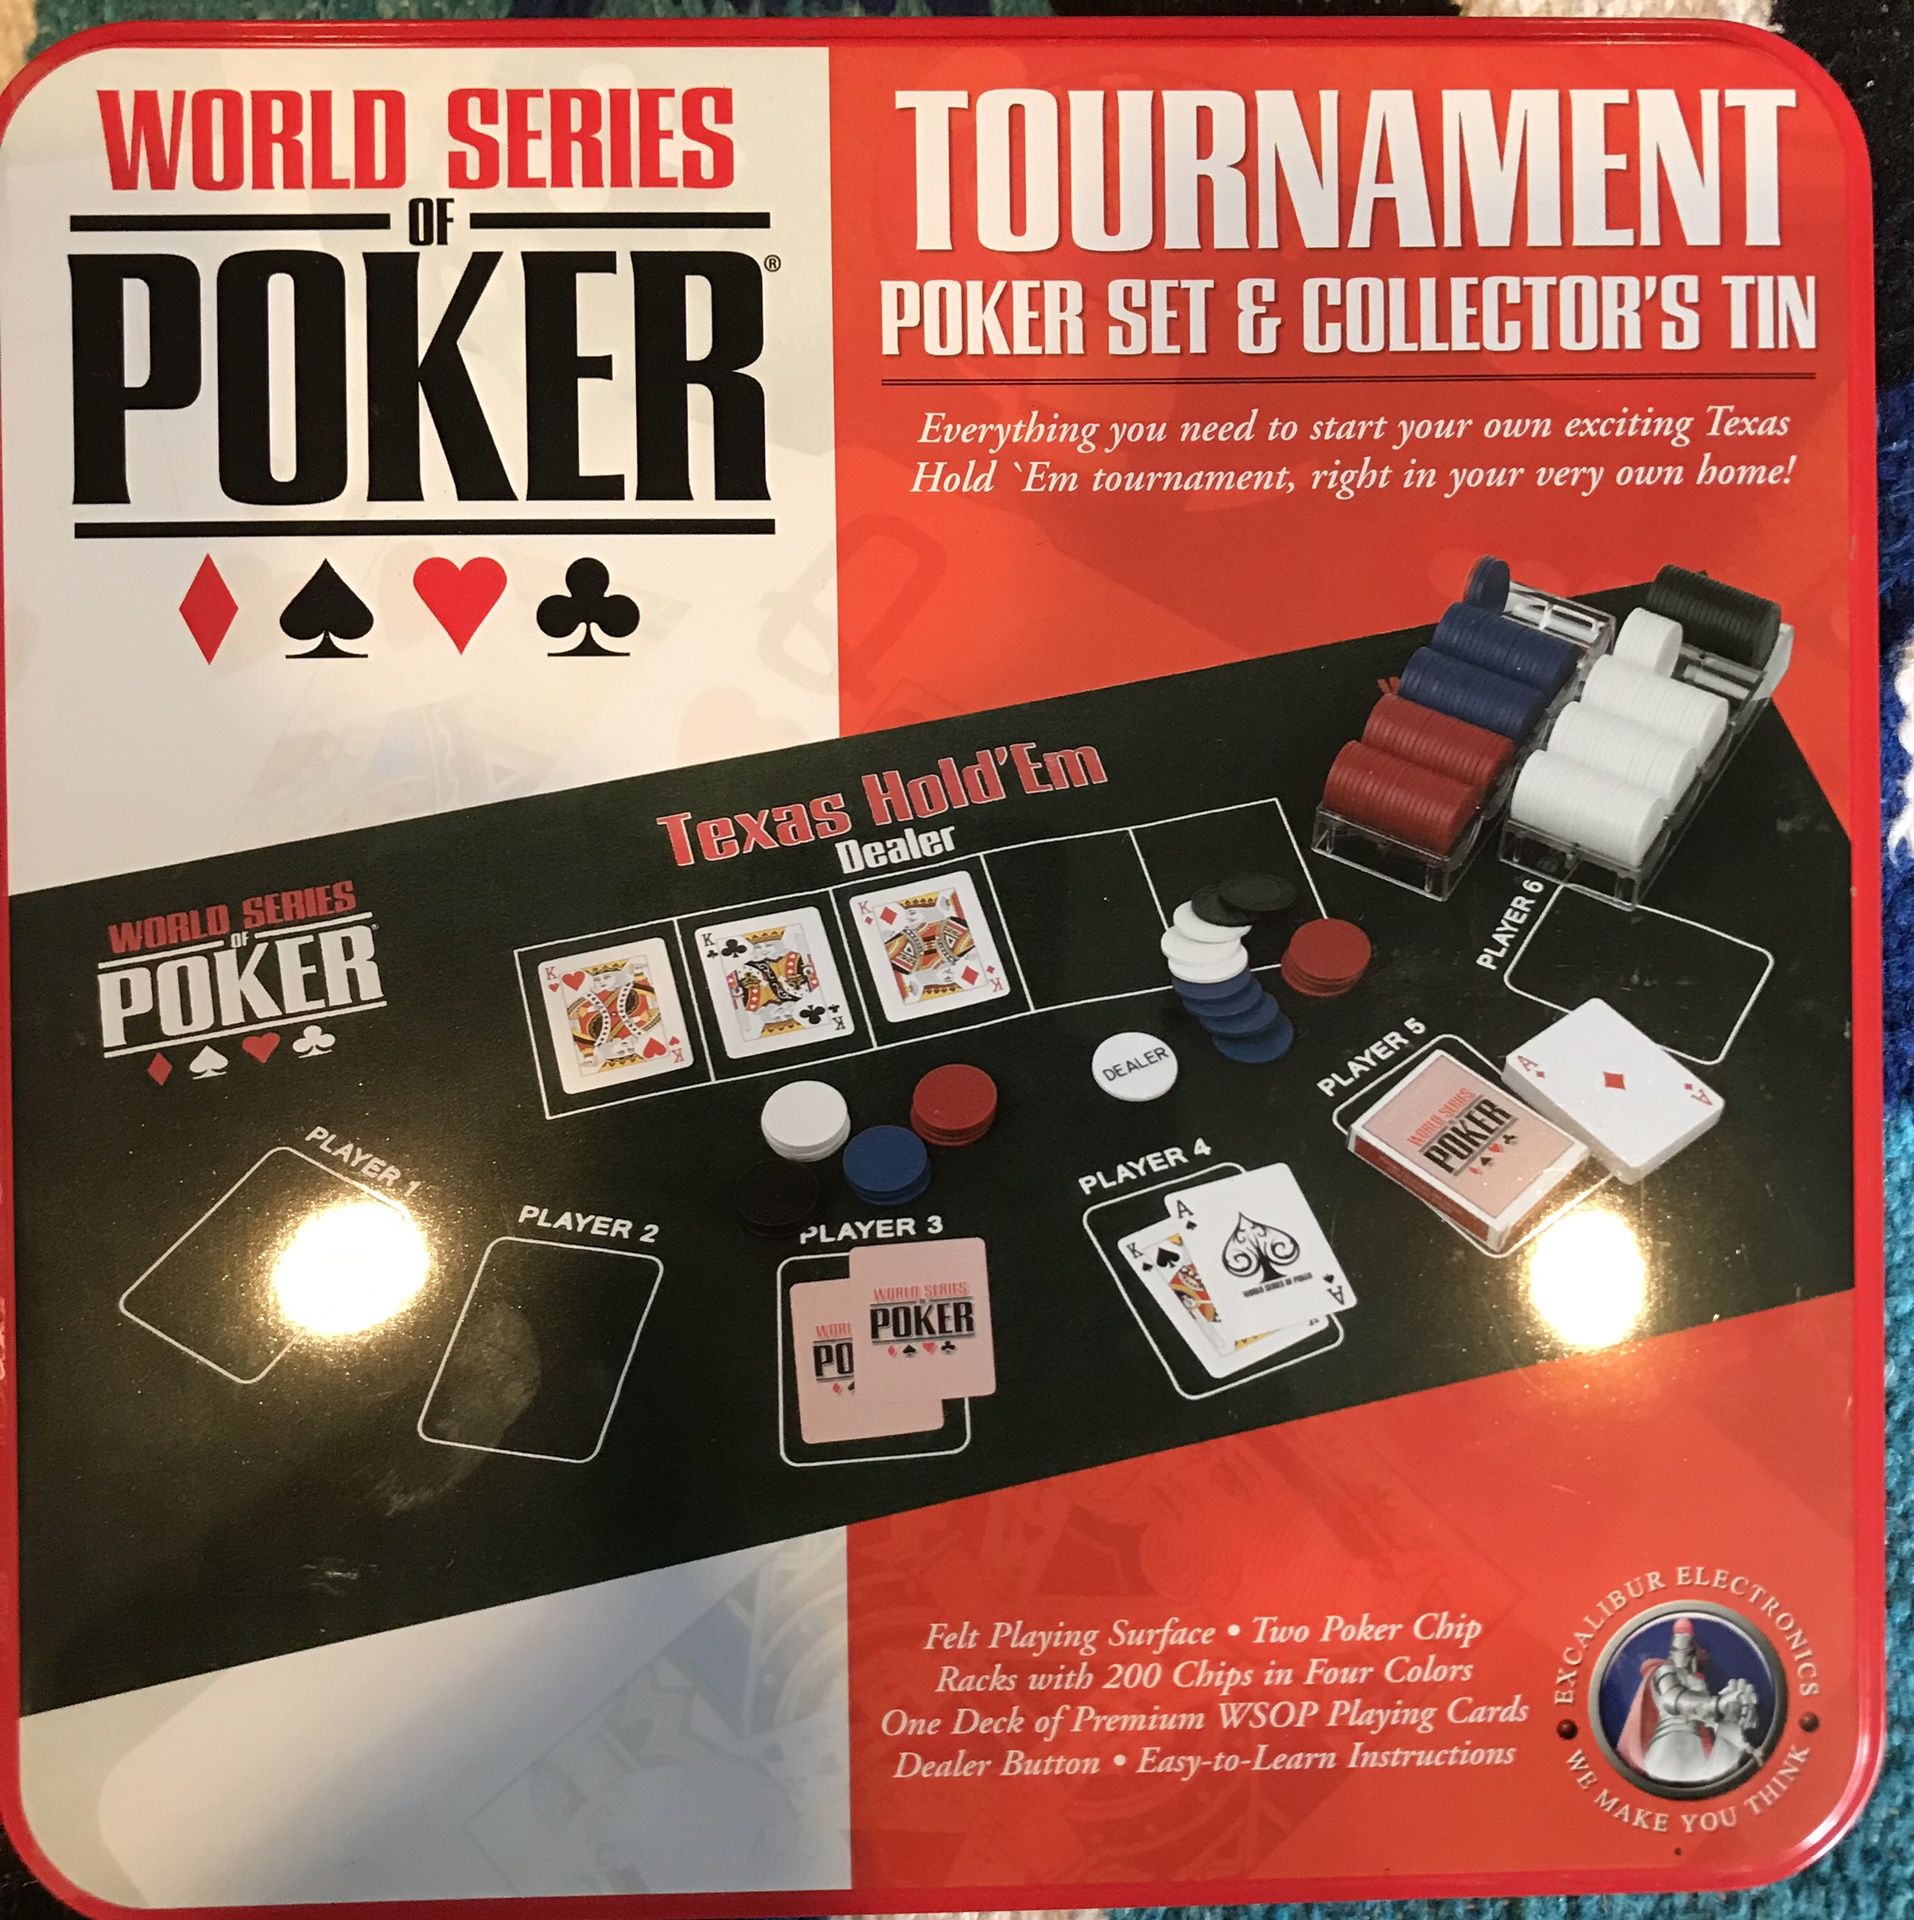 World Series tournament poker set and collectible tin